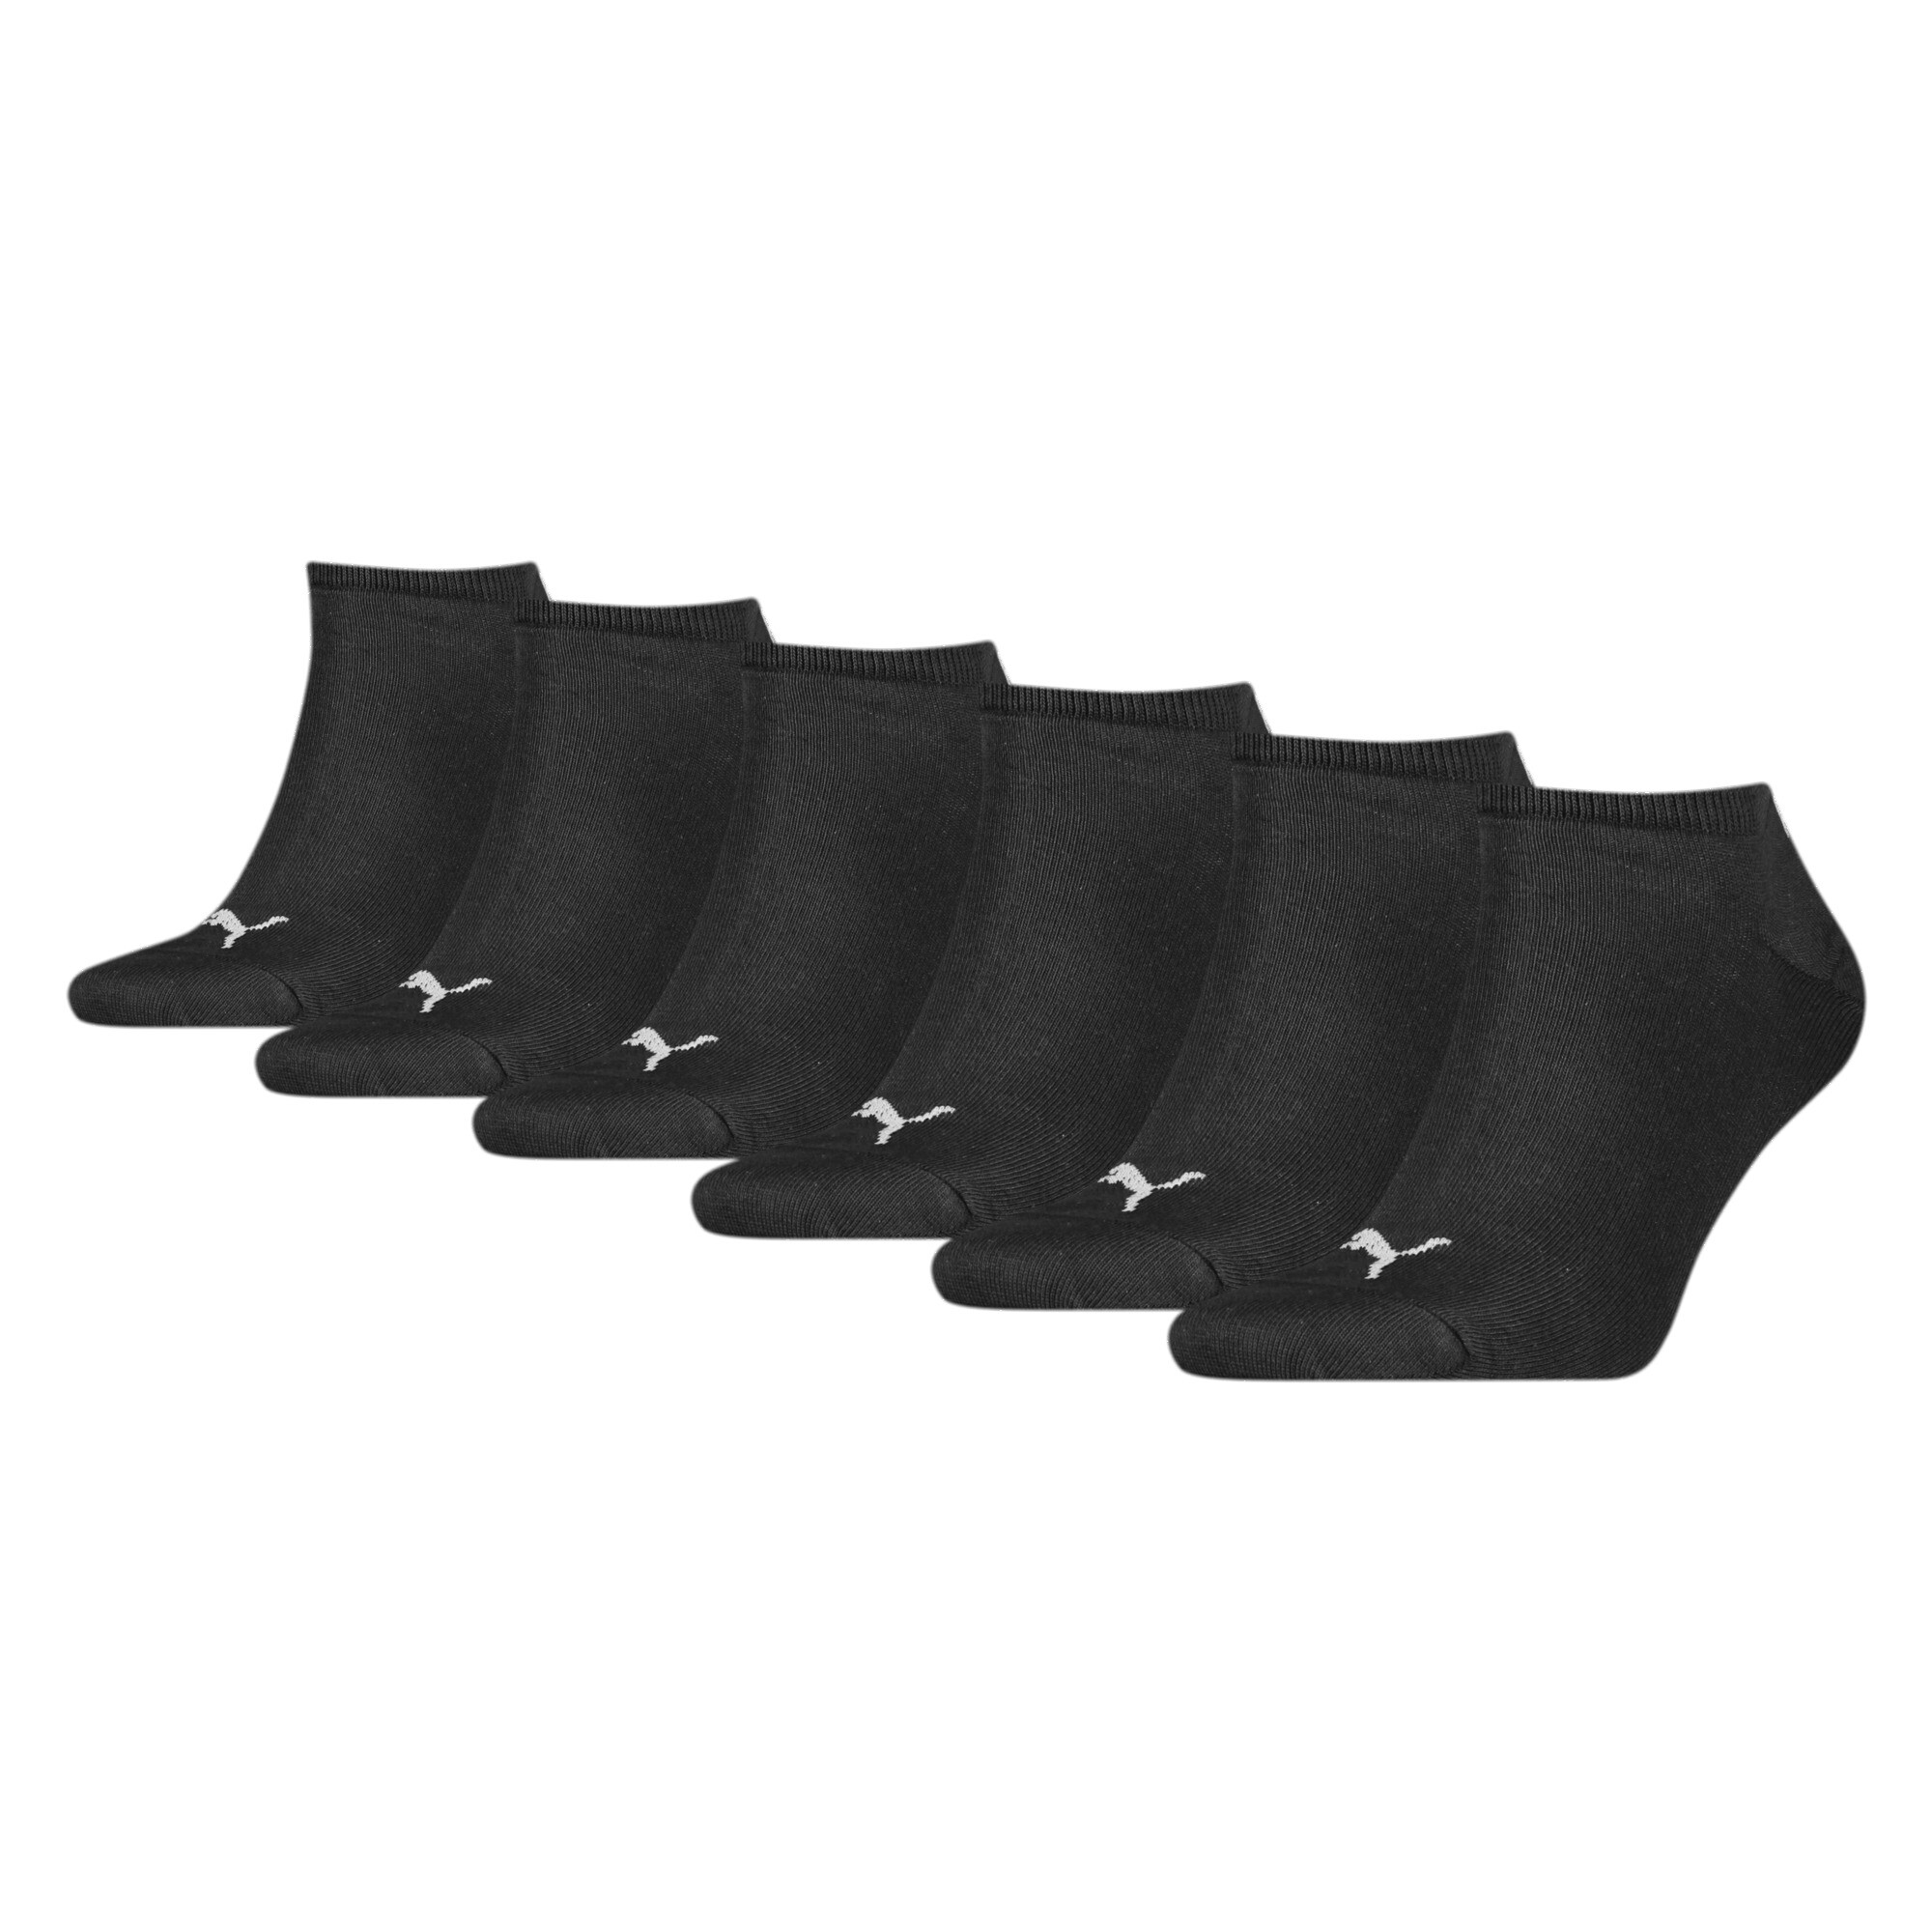 Puma Unisex Sneaker Socks 6 Pack, Black, Size 47-49, Clothing